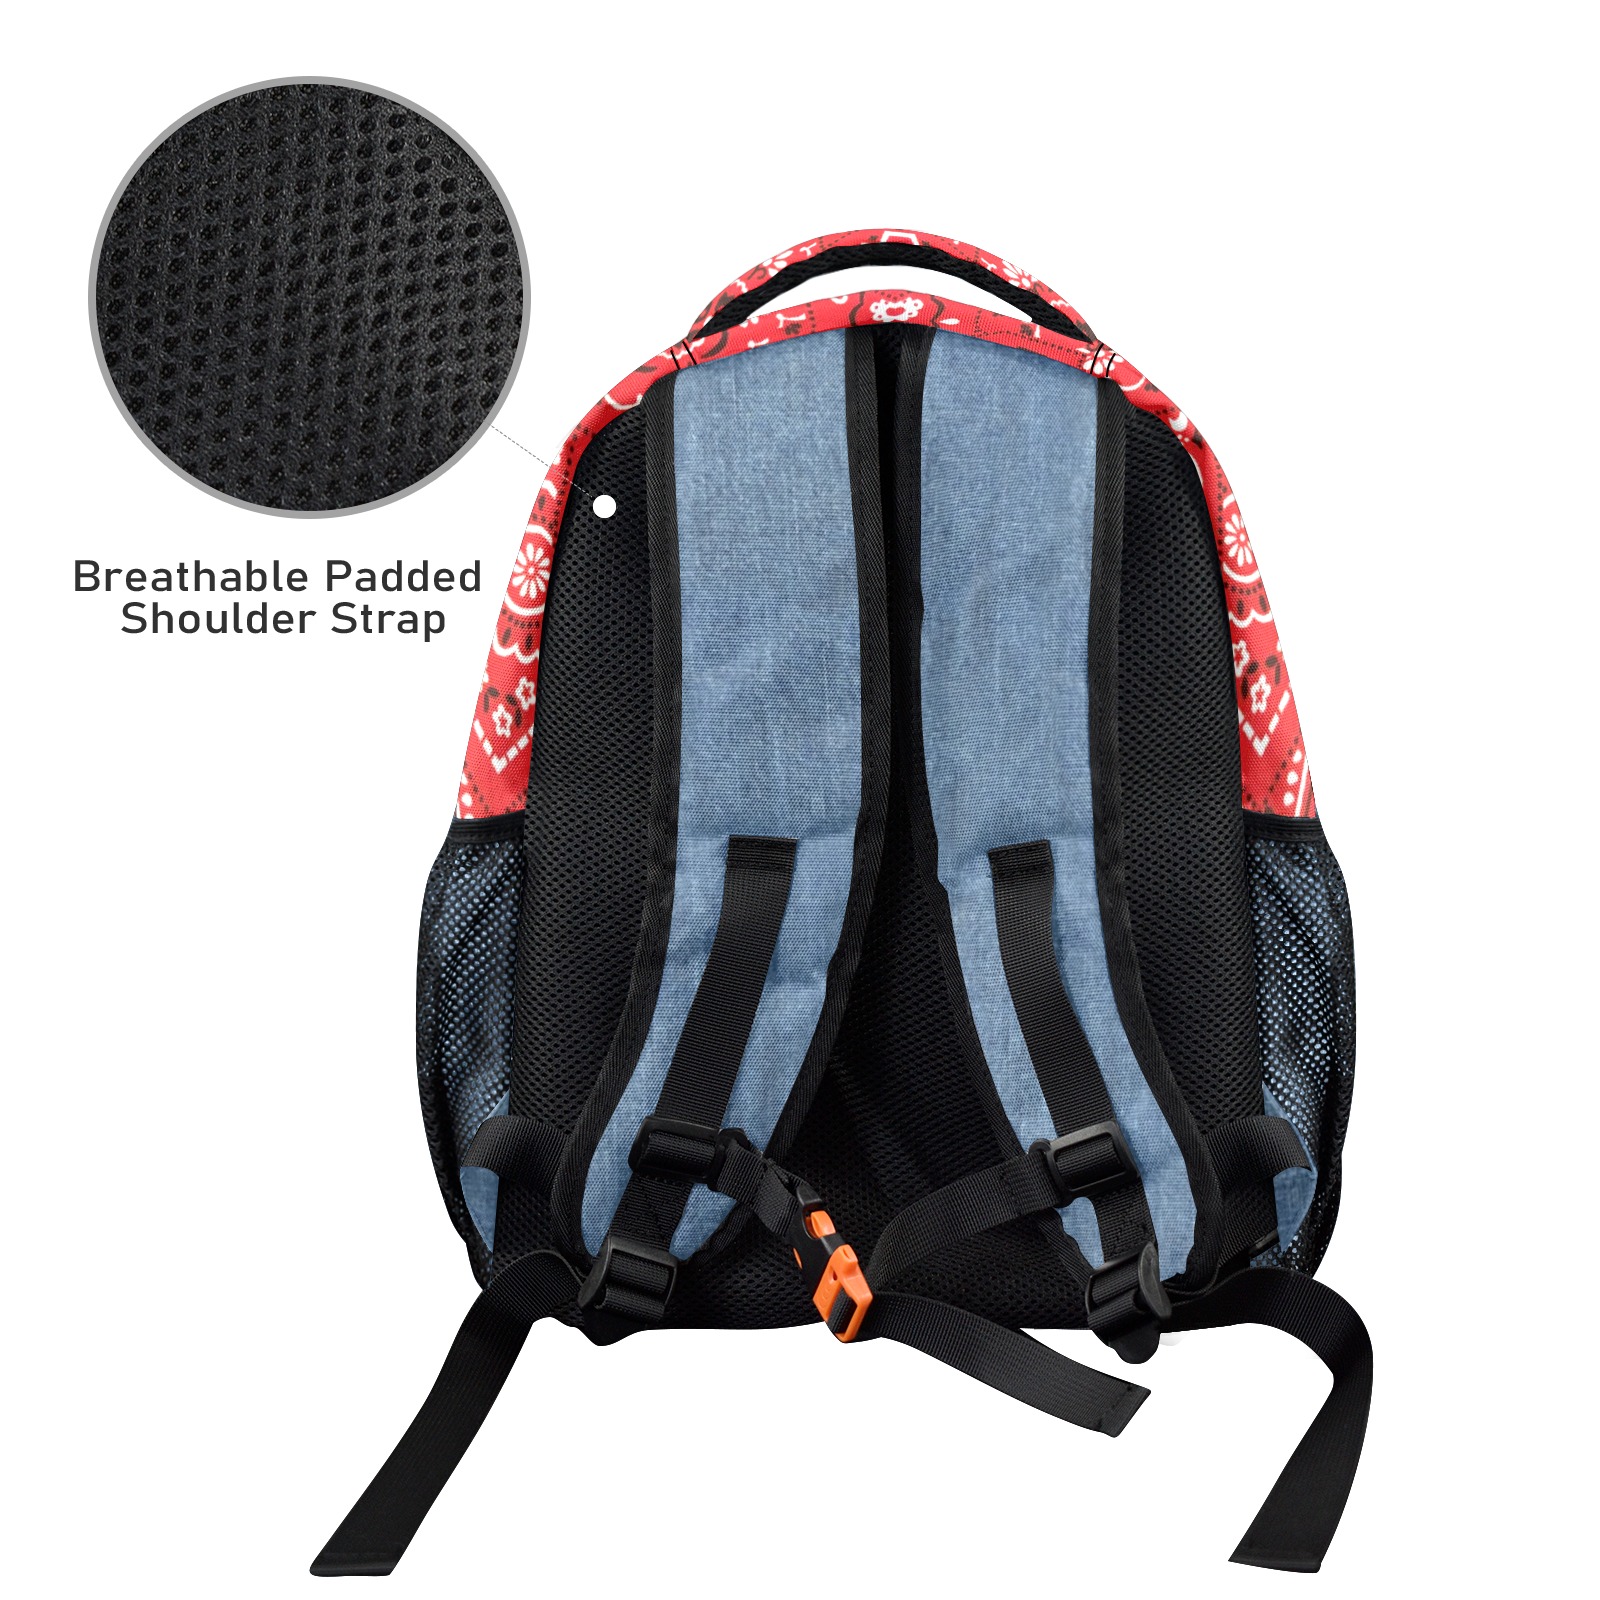 Bandana Heart on Denim-Look 17-inch Casual Backpack